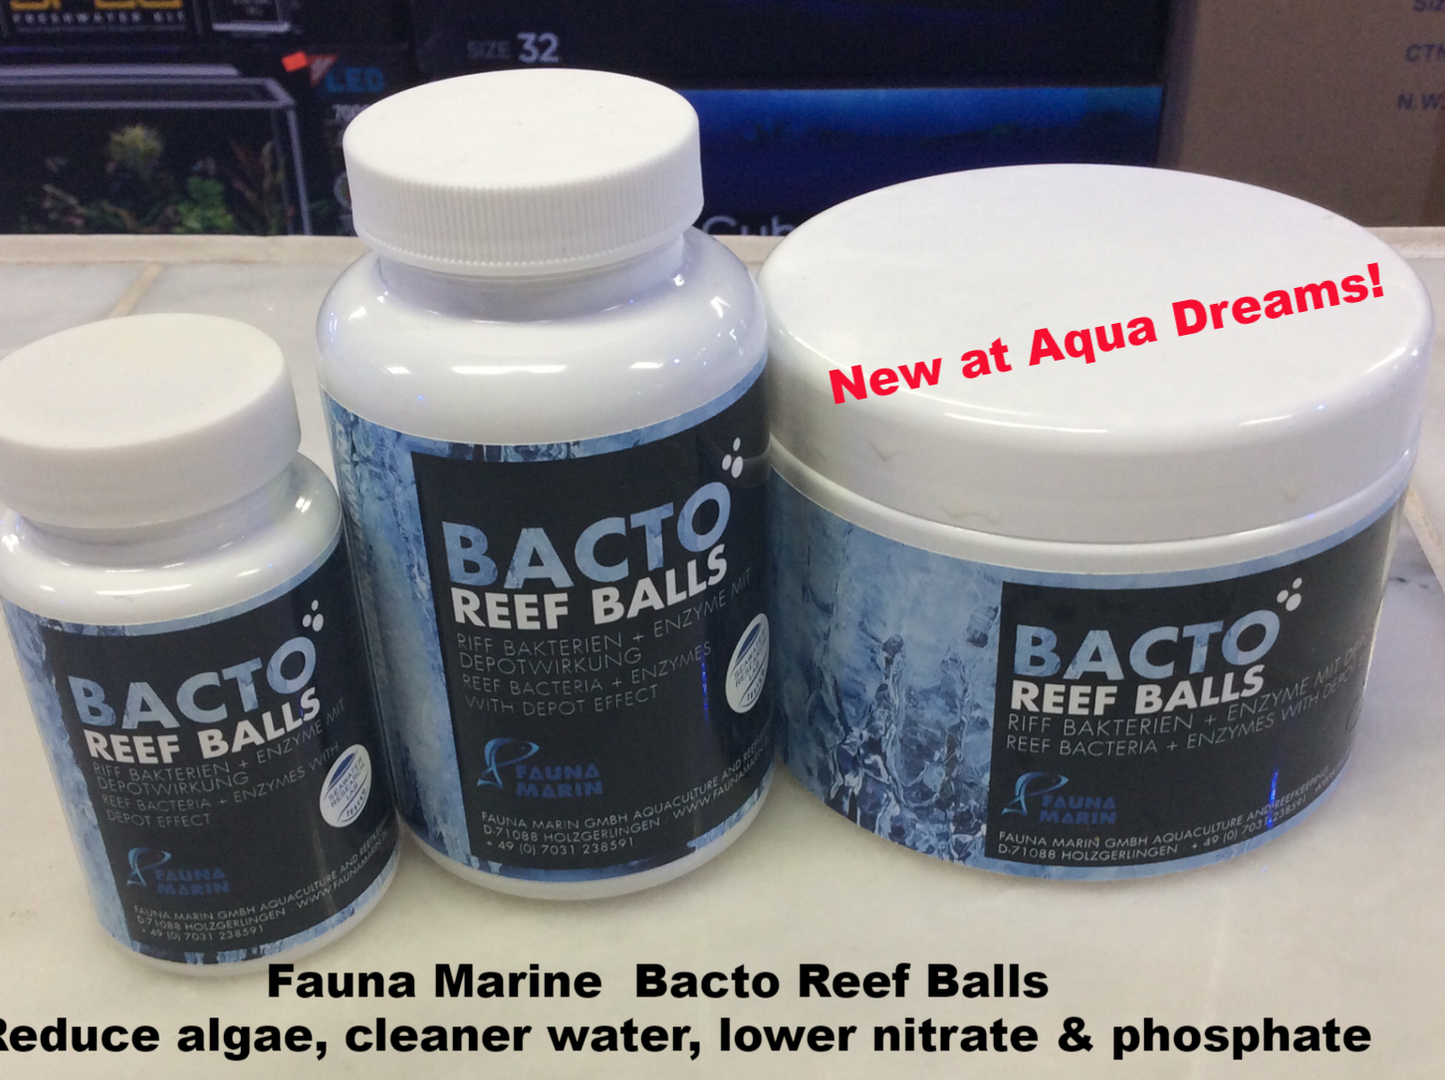 Bacto Reef Balls